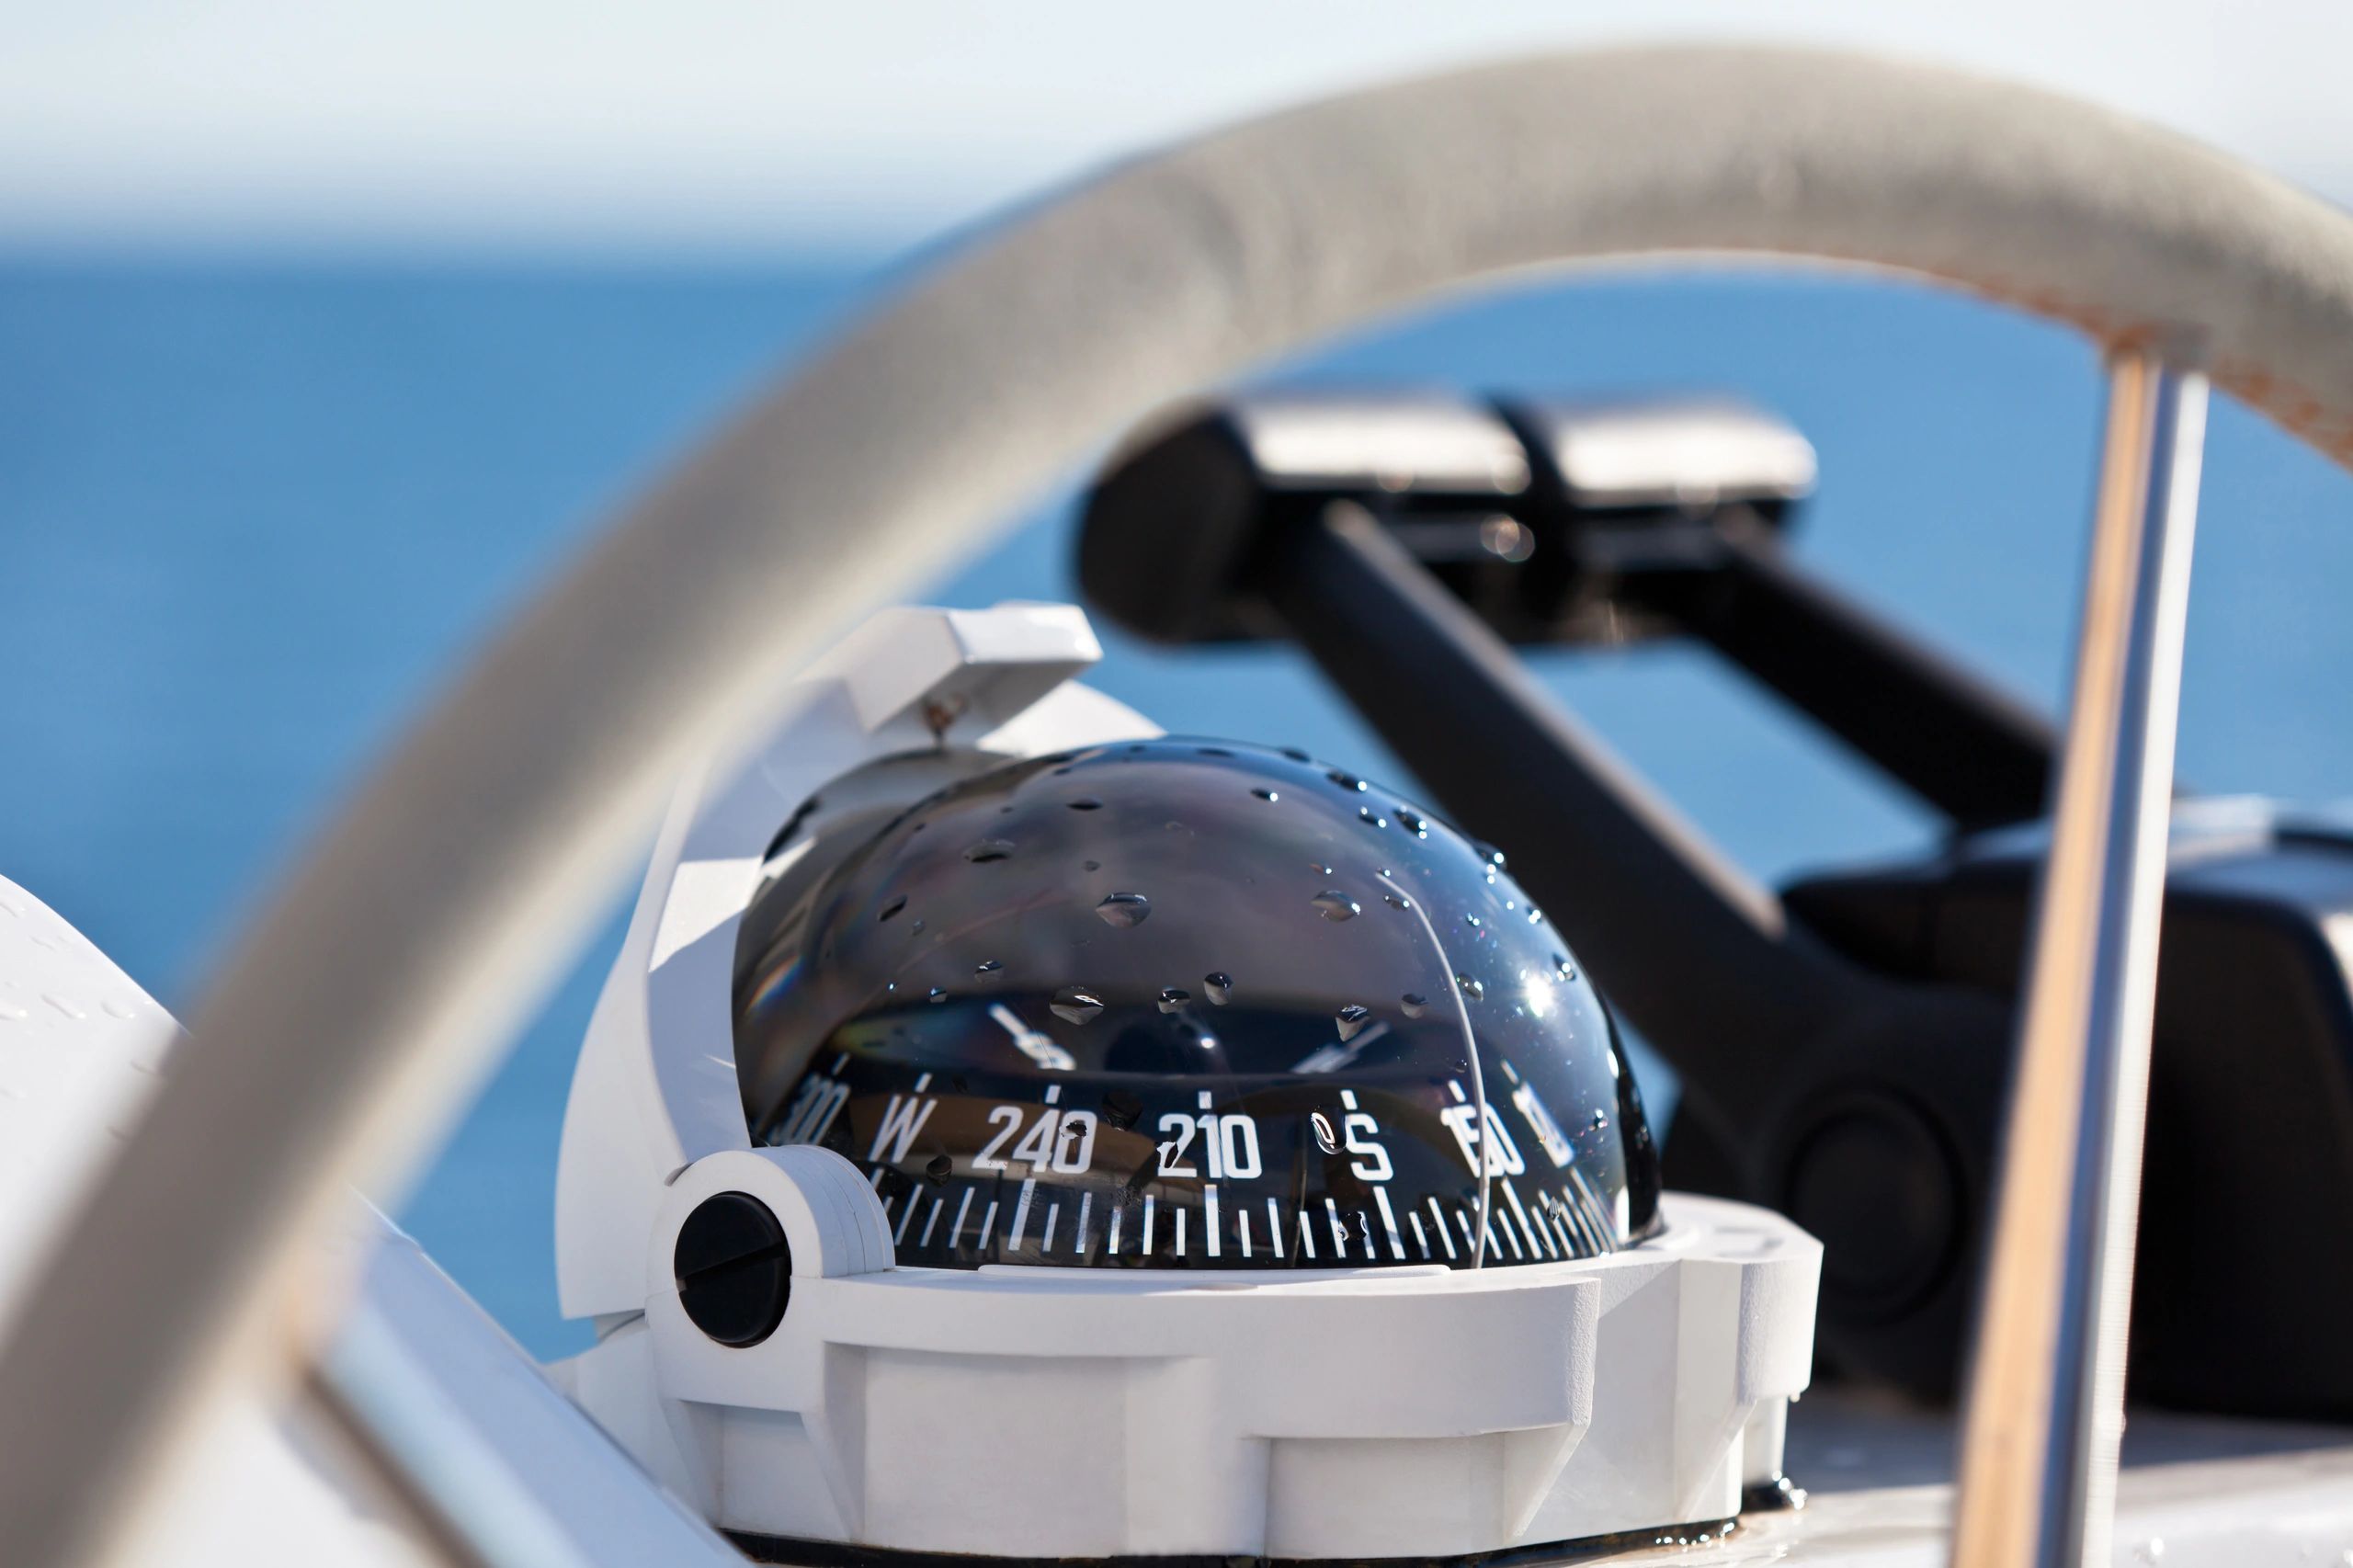 Compass Adjusting & Repairs - Poseidon Navigation Services